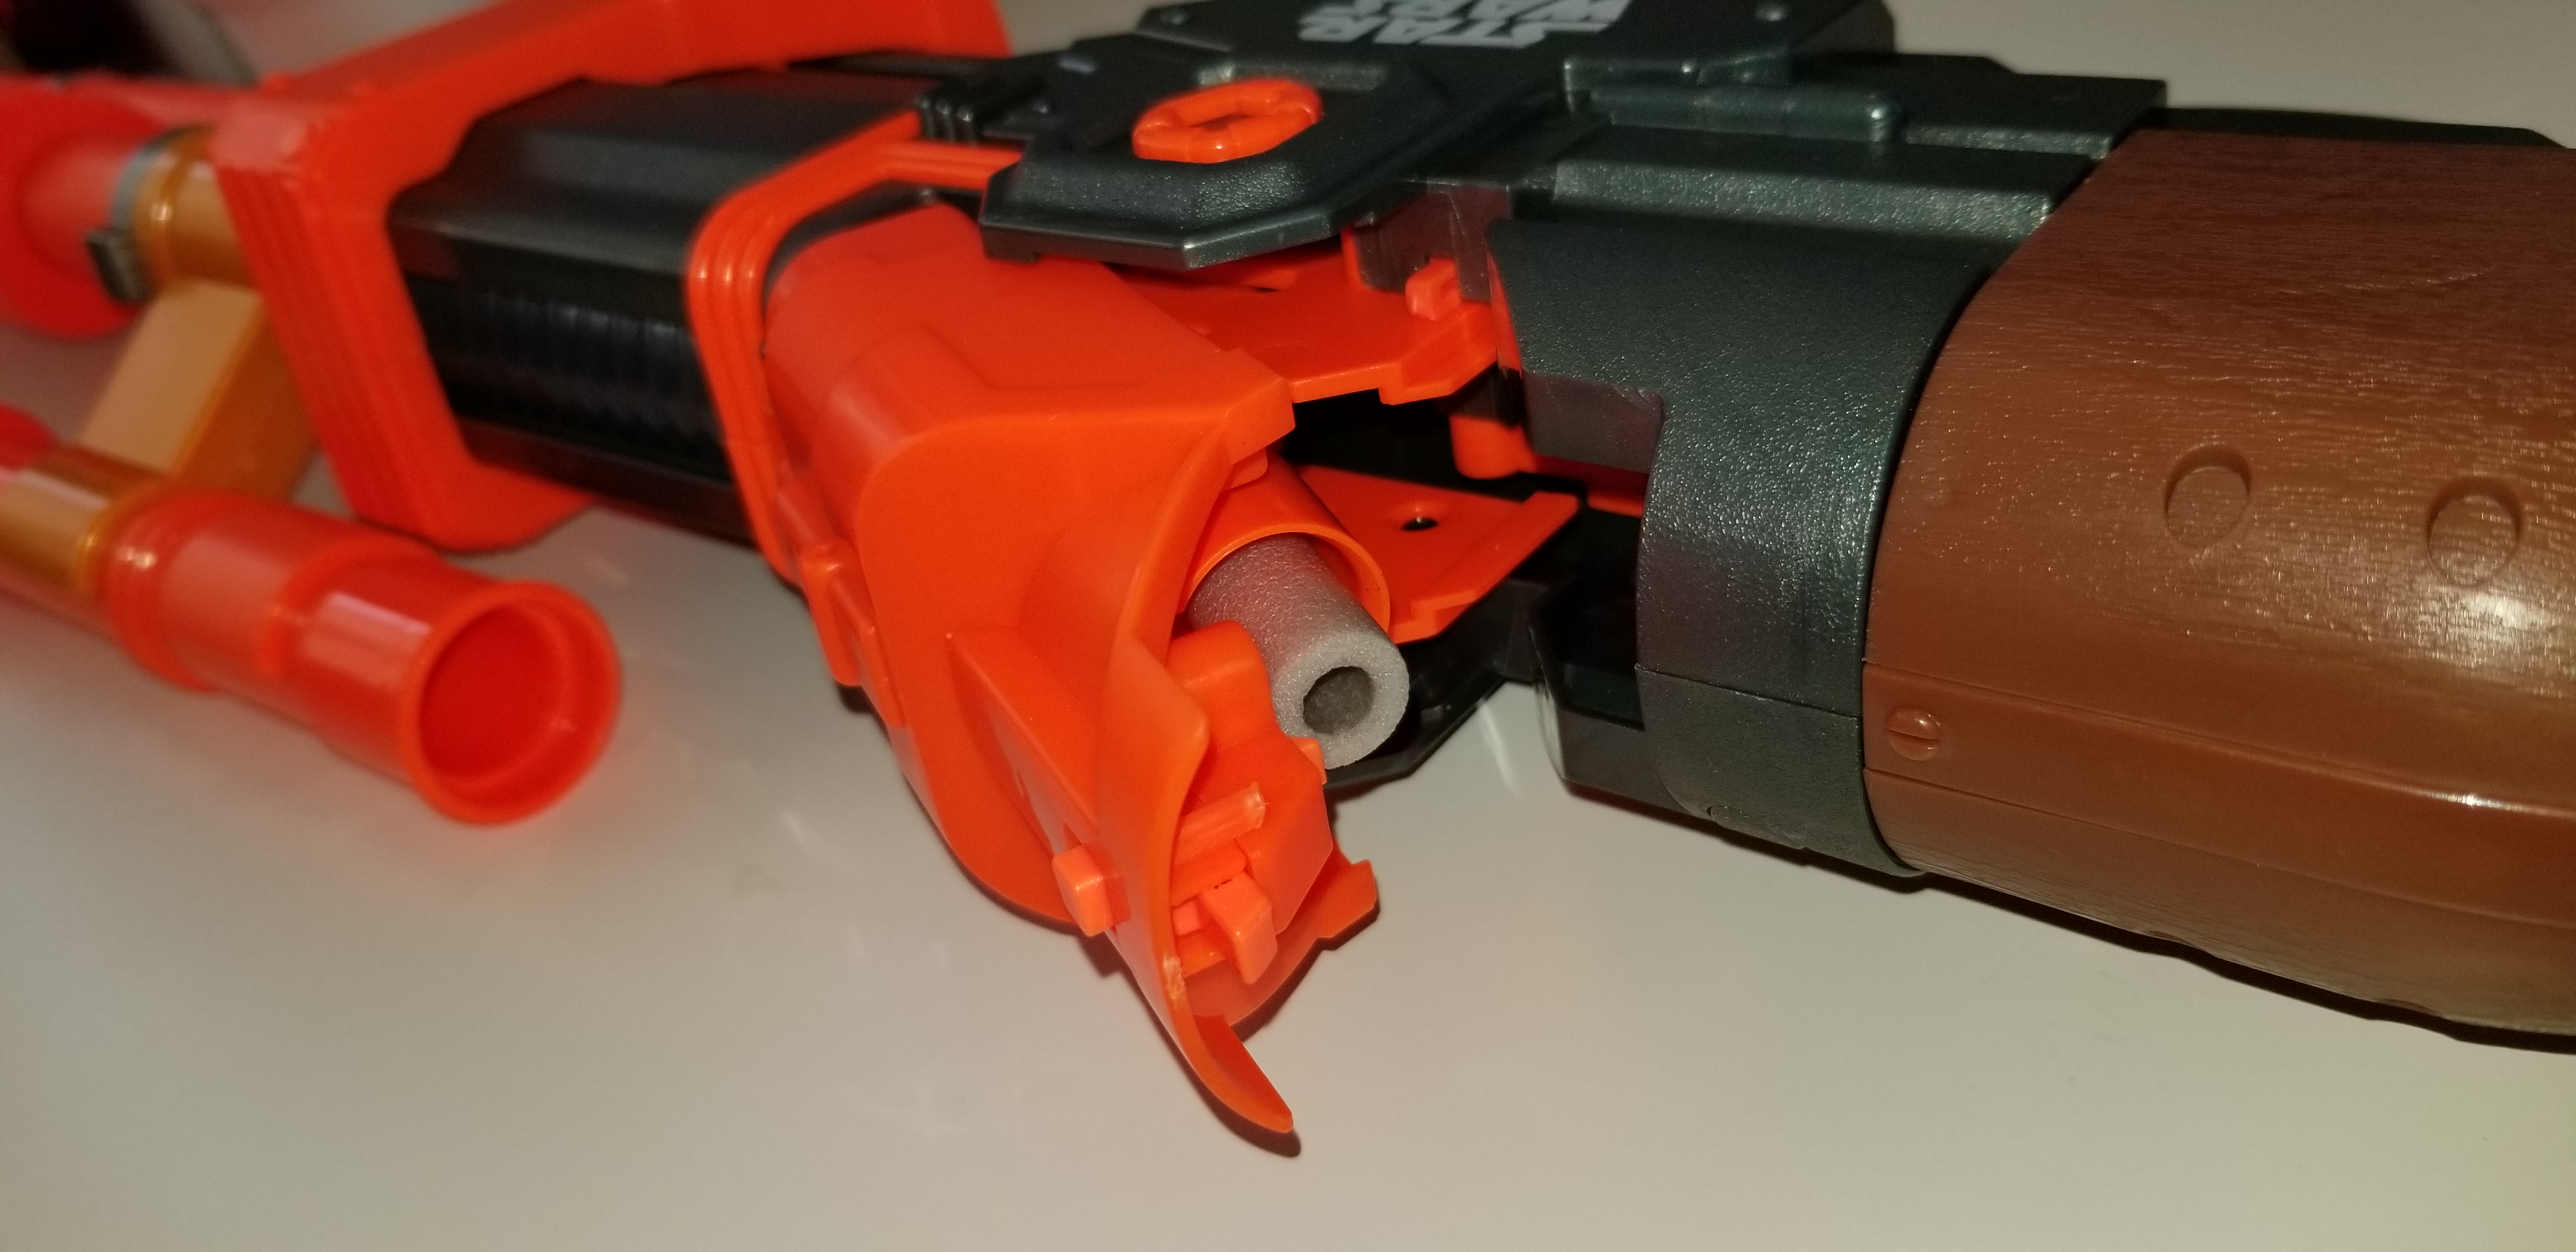 Rifle NERF Amban Phase-Pulse Blaster – Cópia da Arma de Din Djarin em Star  Wars The Mandalorian « Blog de Brinquedo